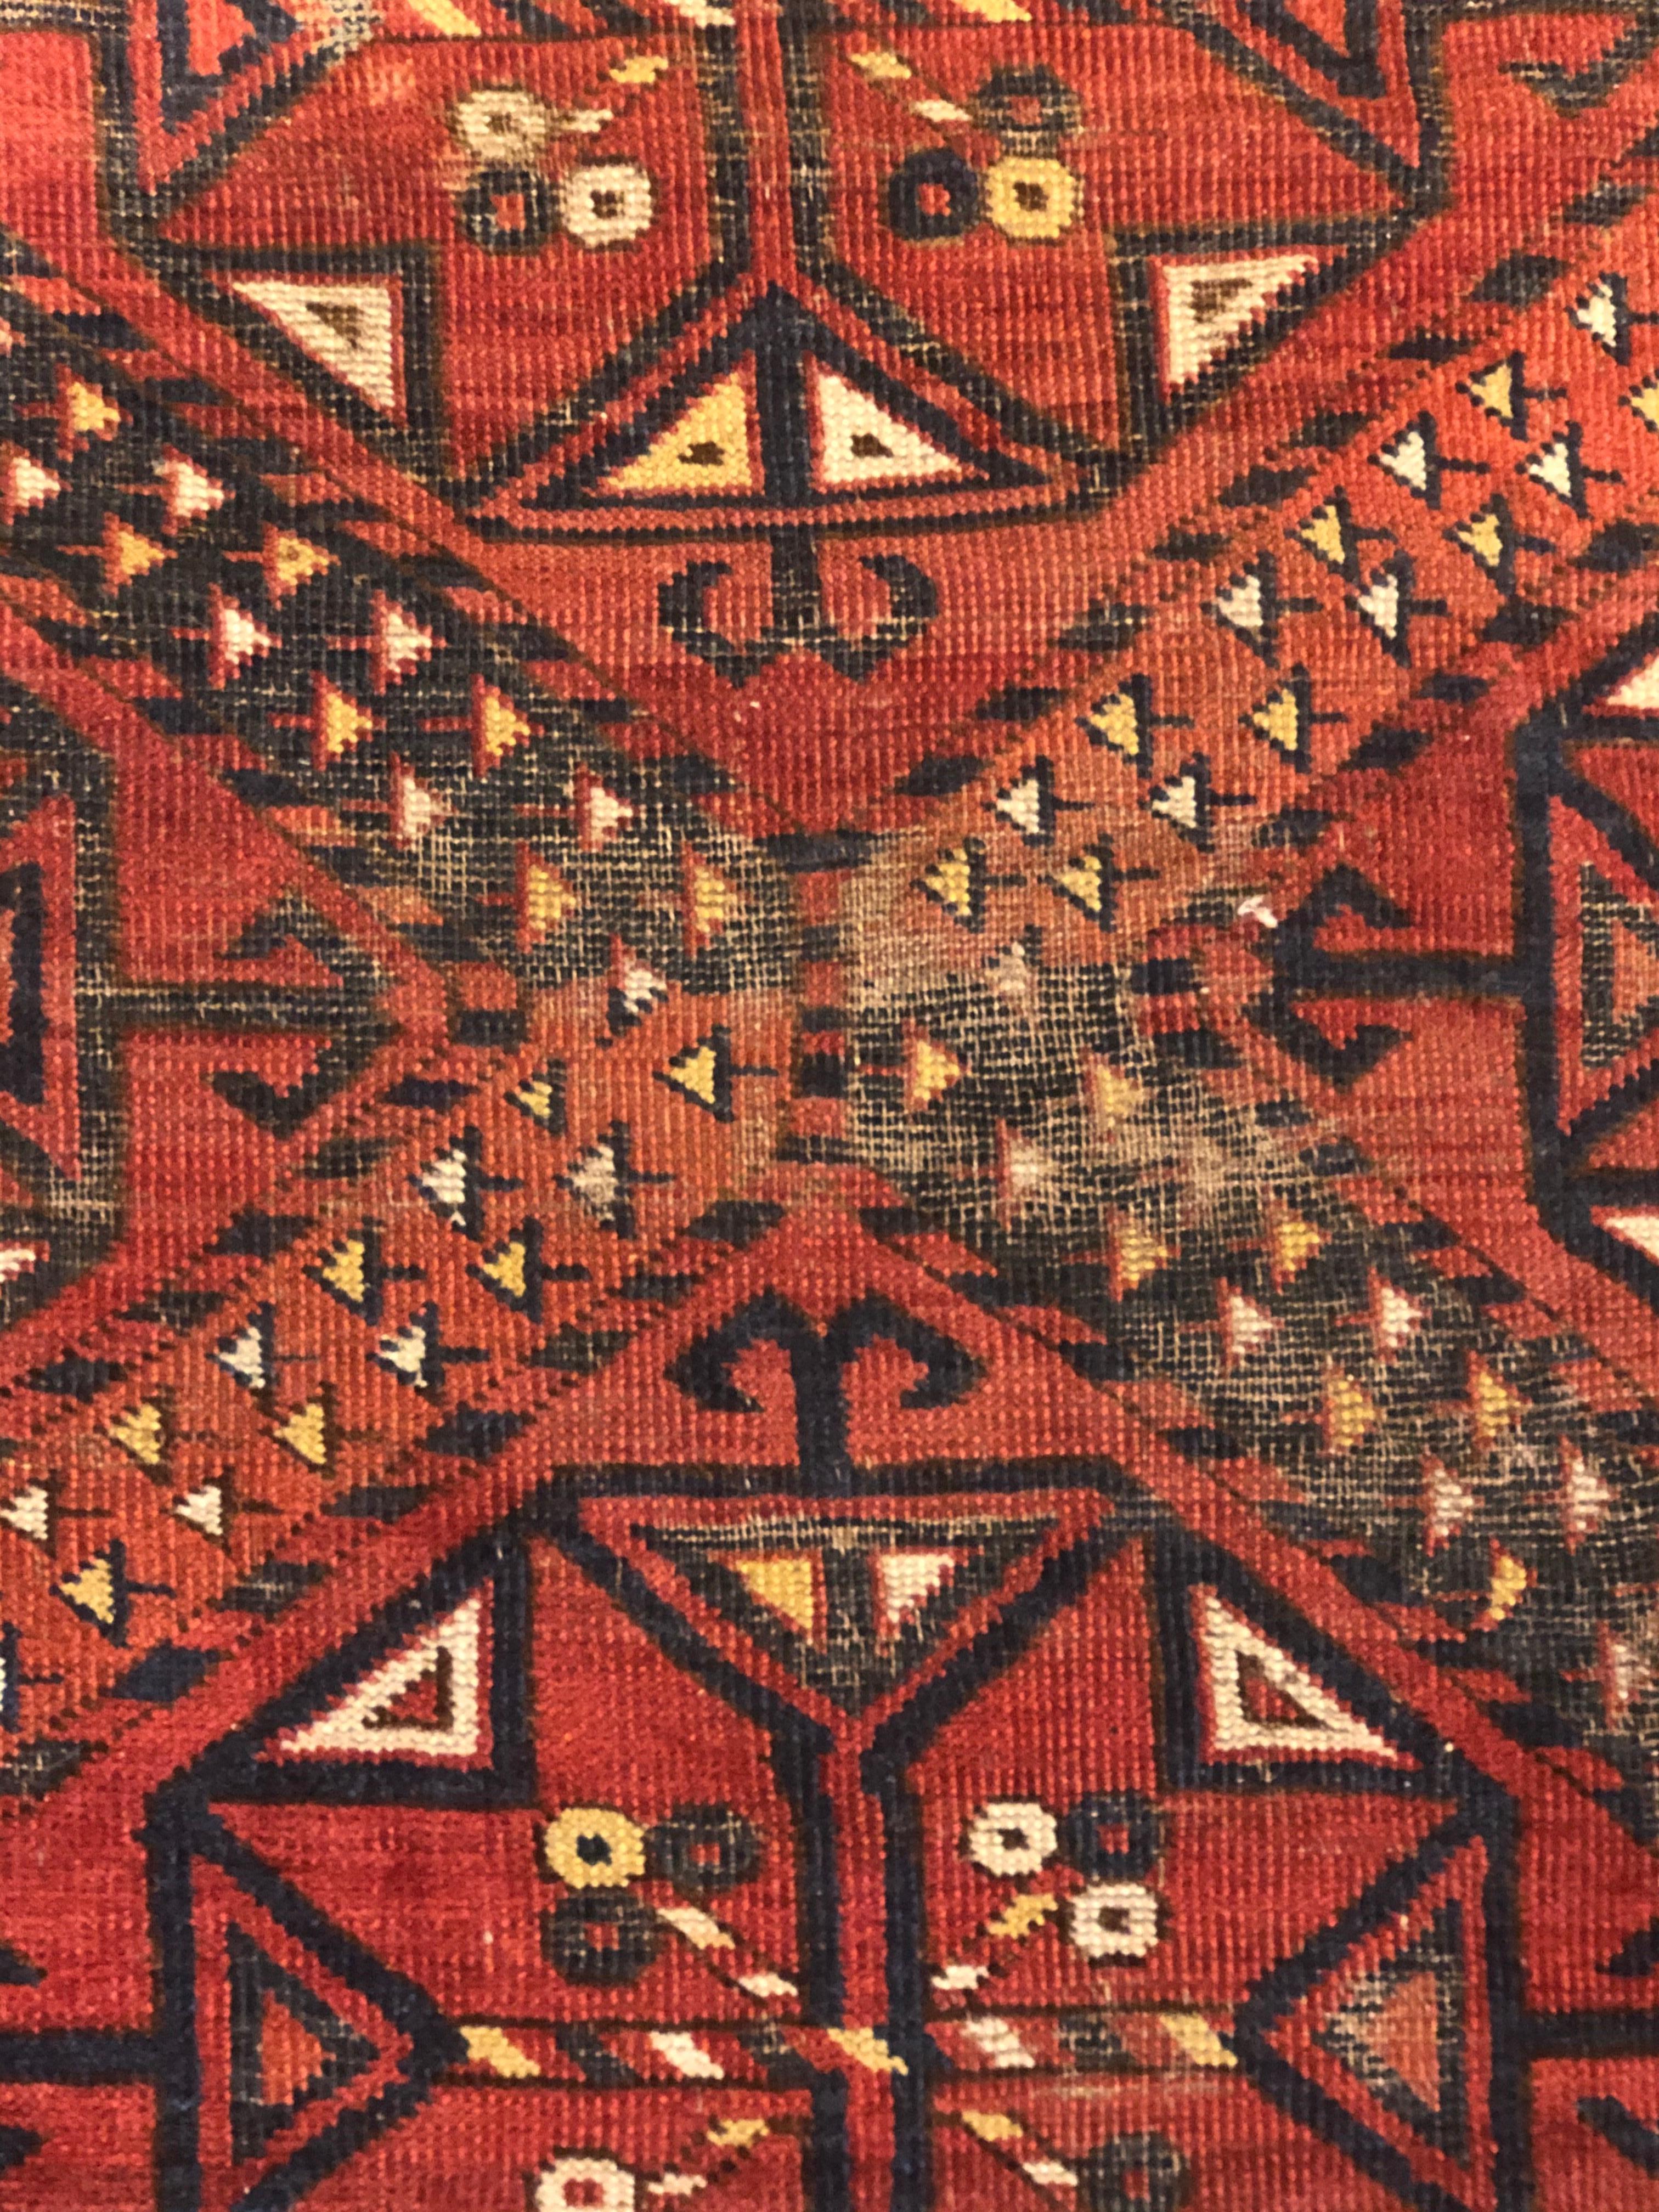 19th Century Antique Red Geometric Turkmen Erzari Rug € 9, 000, ca 1870 For Sale 12